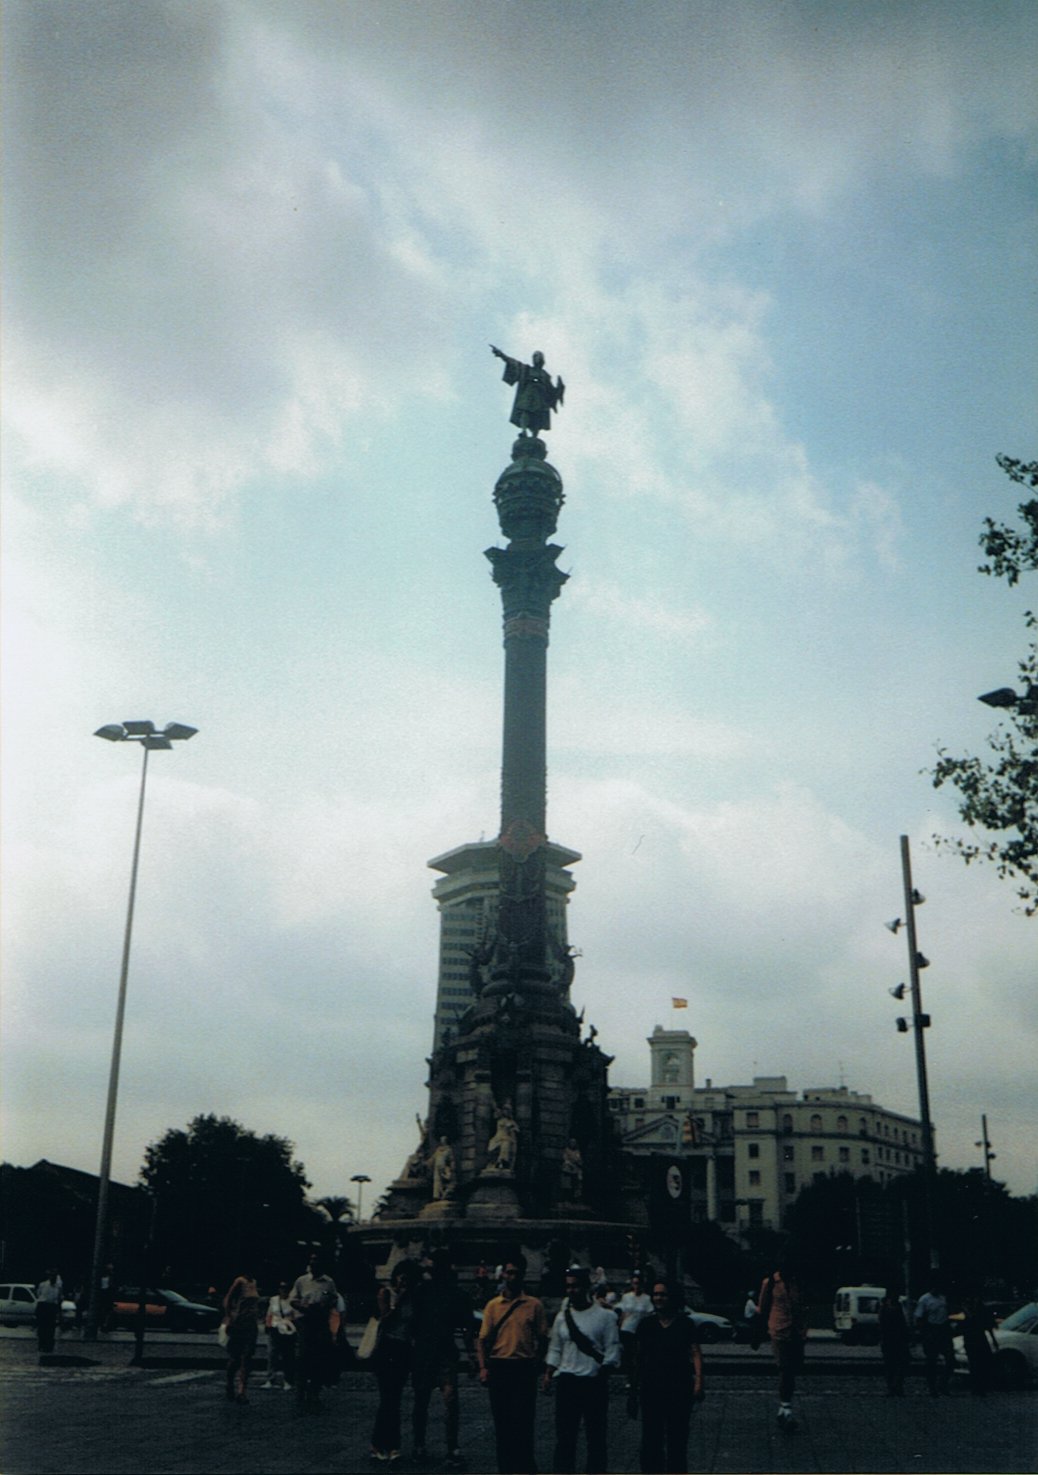 Monumento a Colon